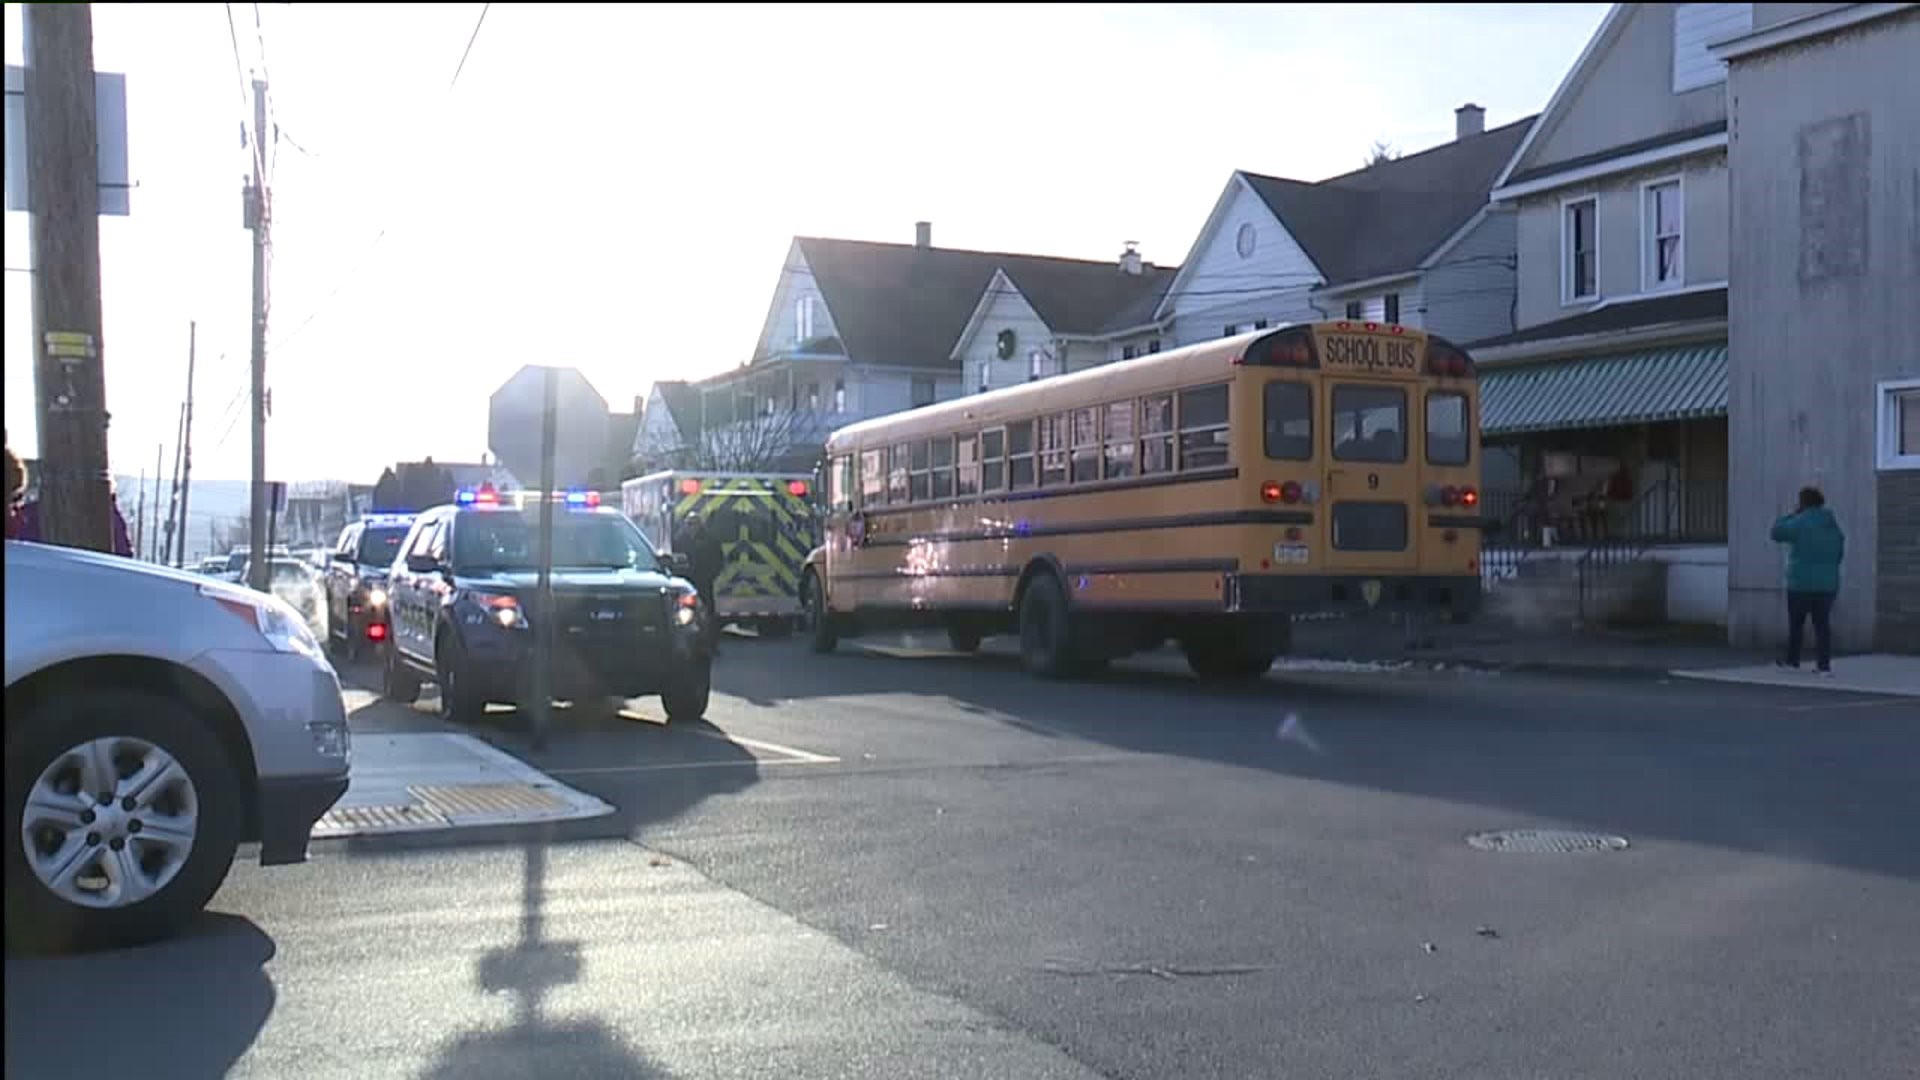 Glare from Sun Blamed for School Bus Crash